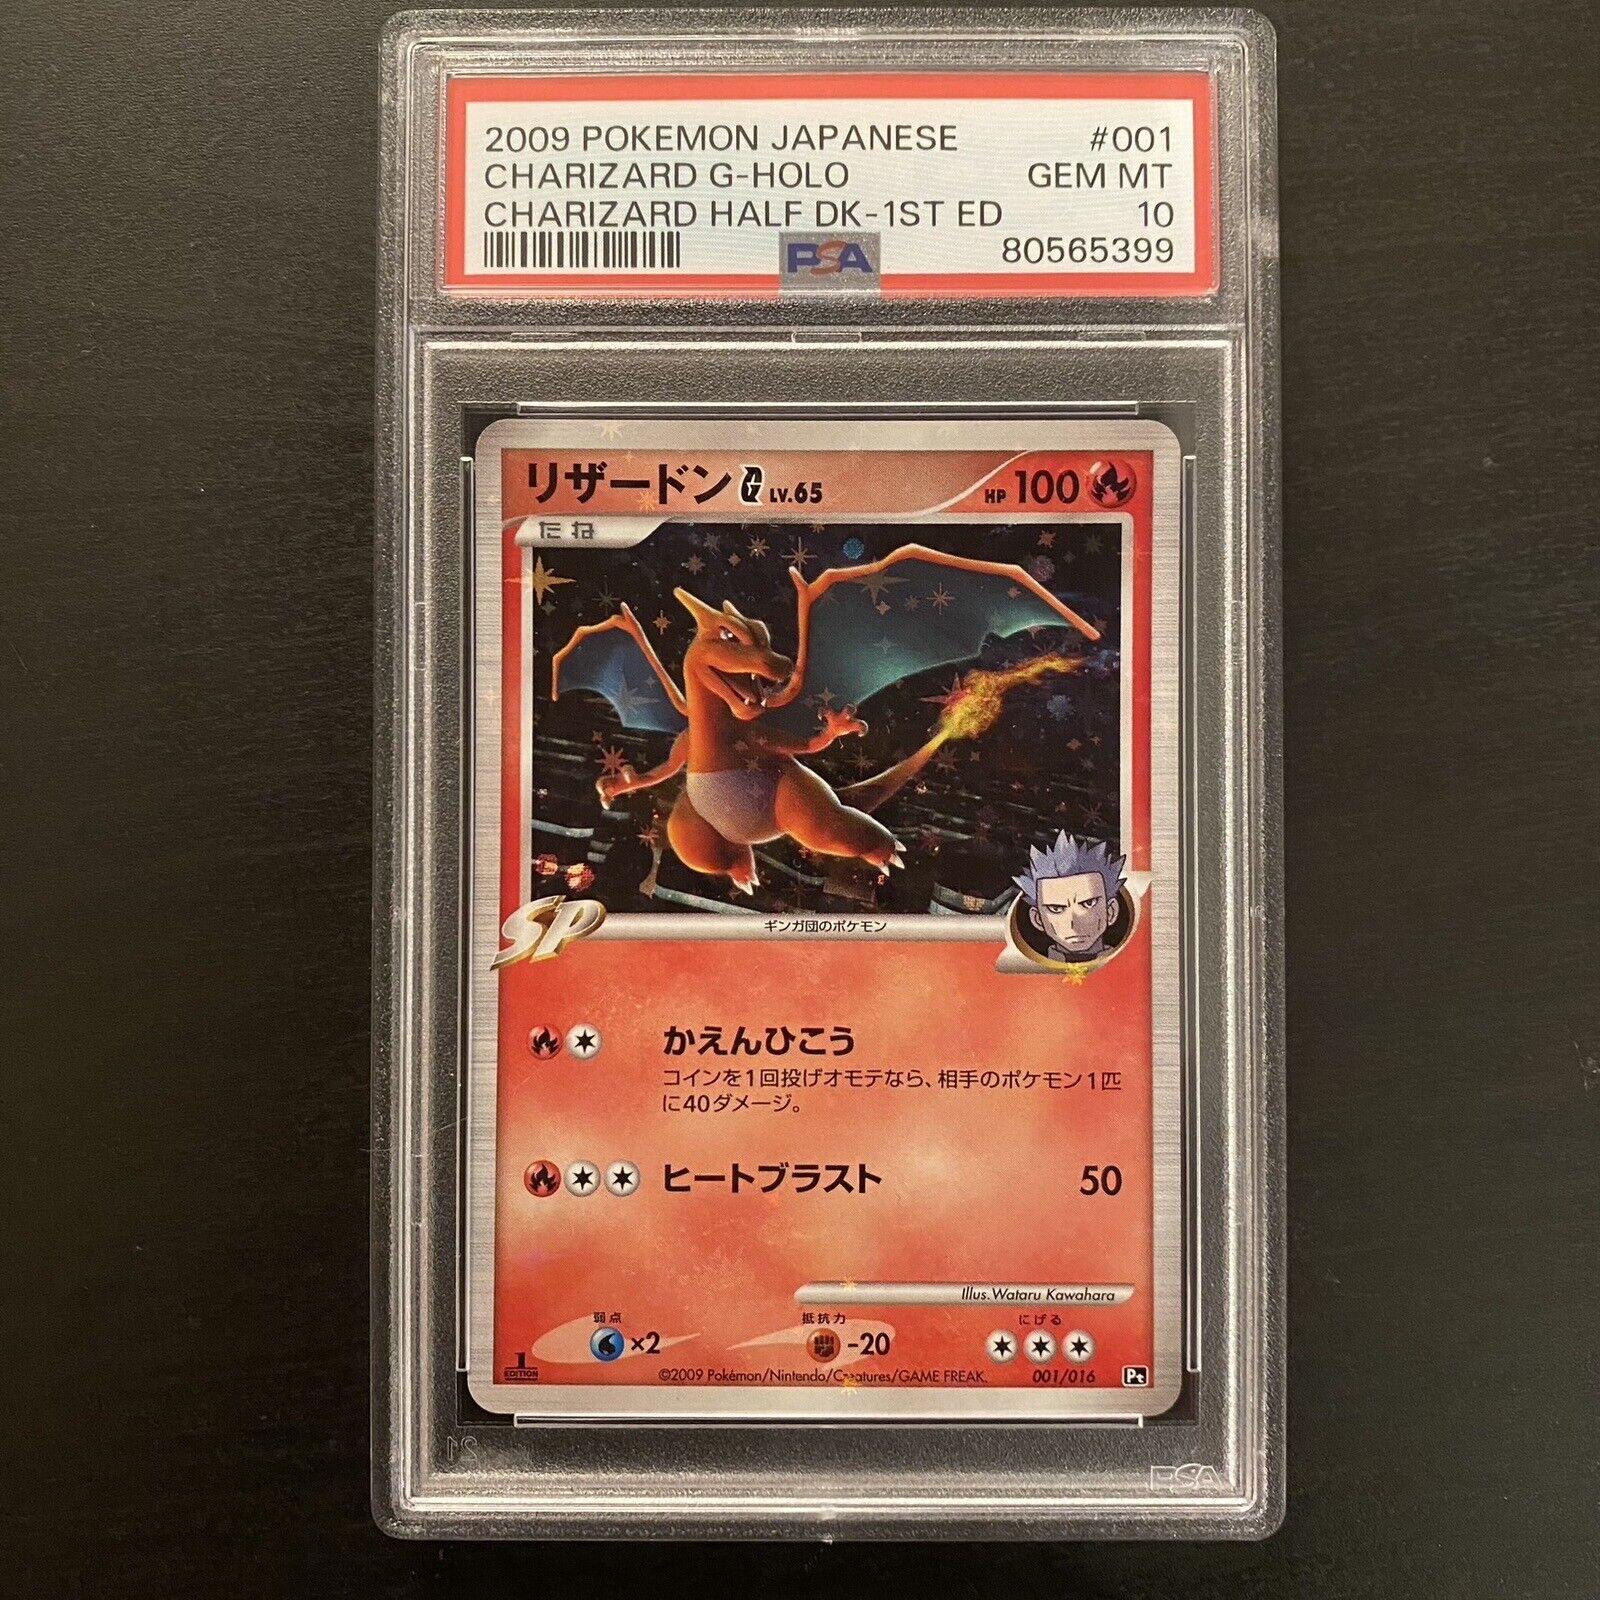 CHARIZARD G 001/016 | PSA 10 | Half Deck Japanese Graded Pokémon Card